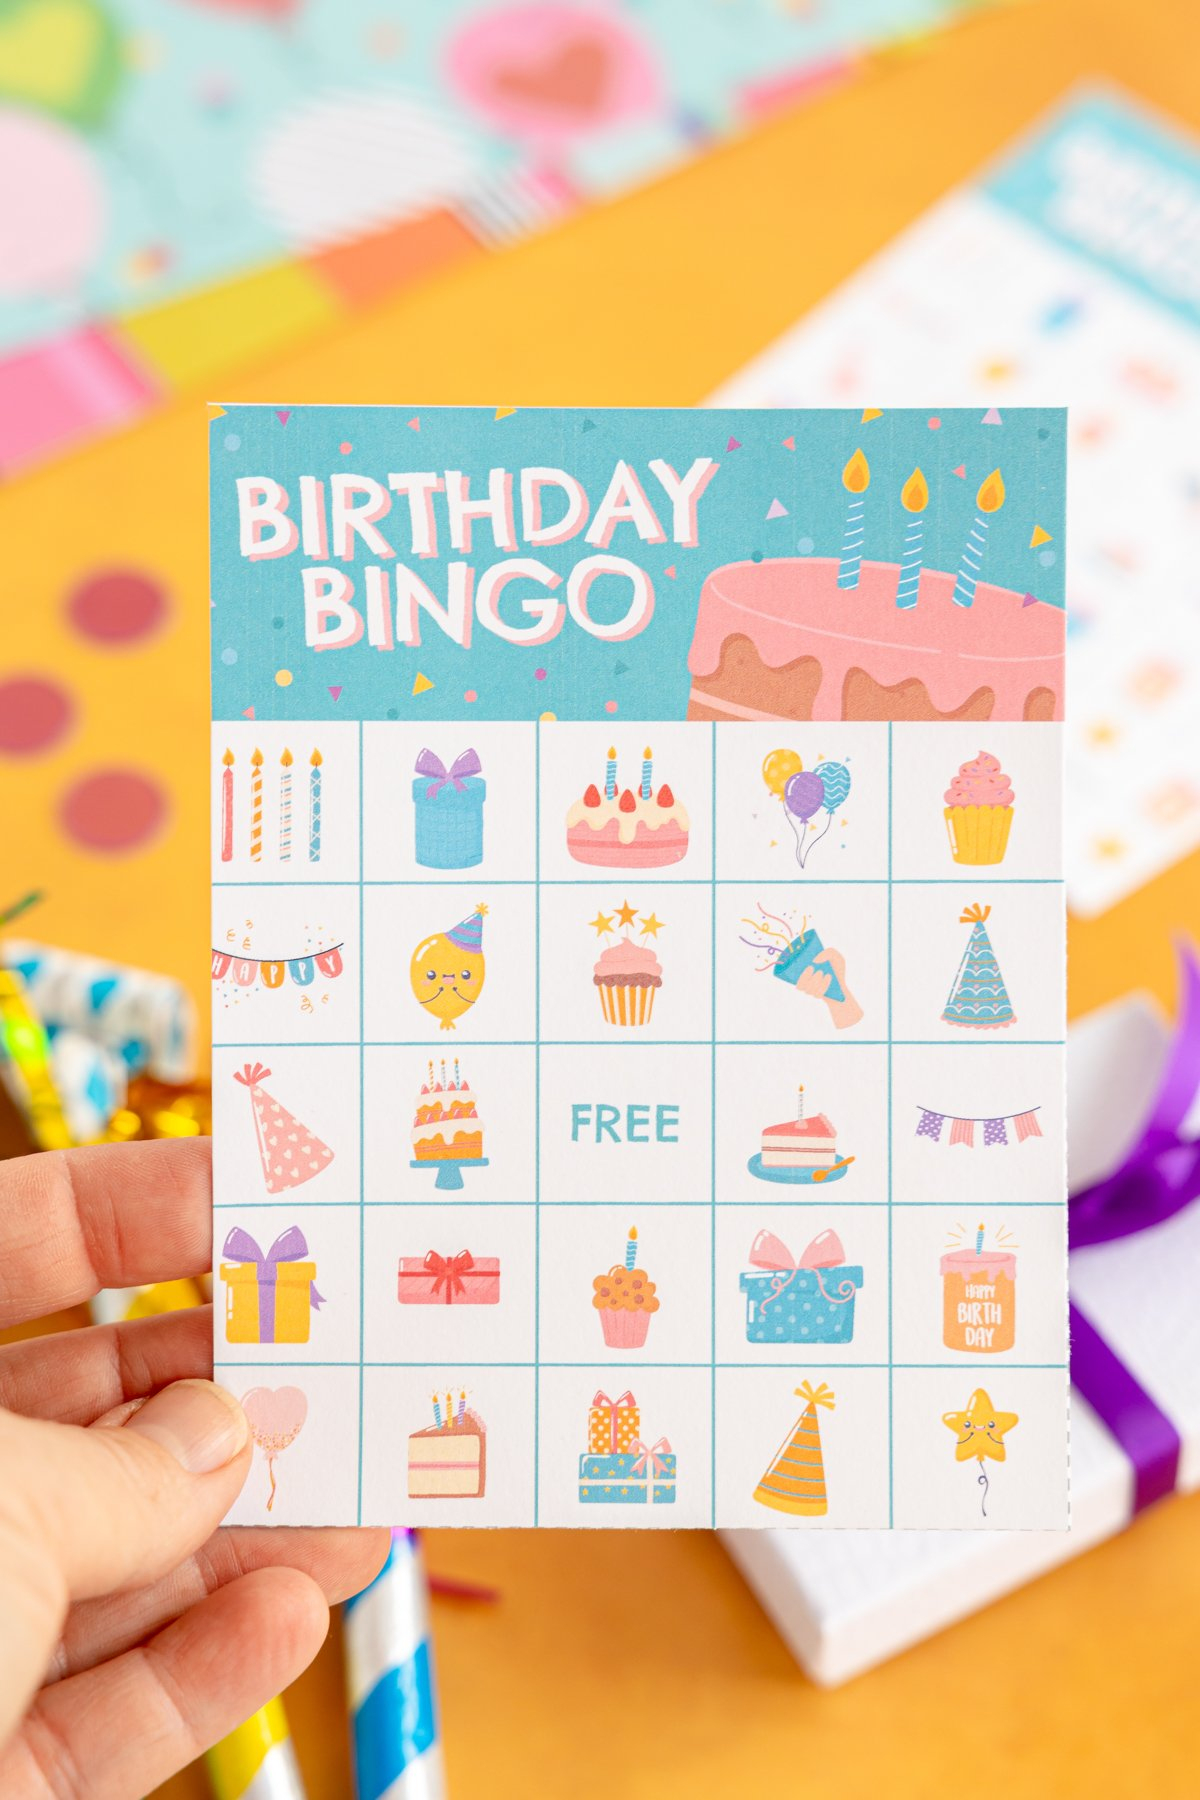 Free Printable Birthday Bingo Cards - Play Party Plan - Free Printable Birthday Bingo Cards For Adults